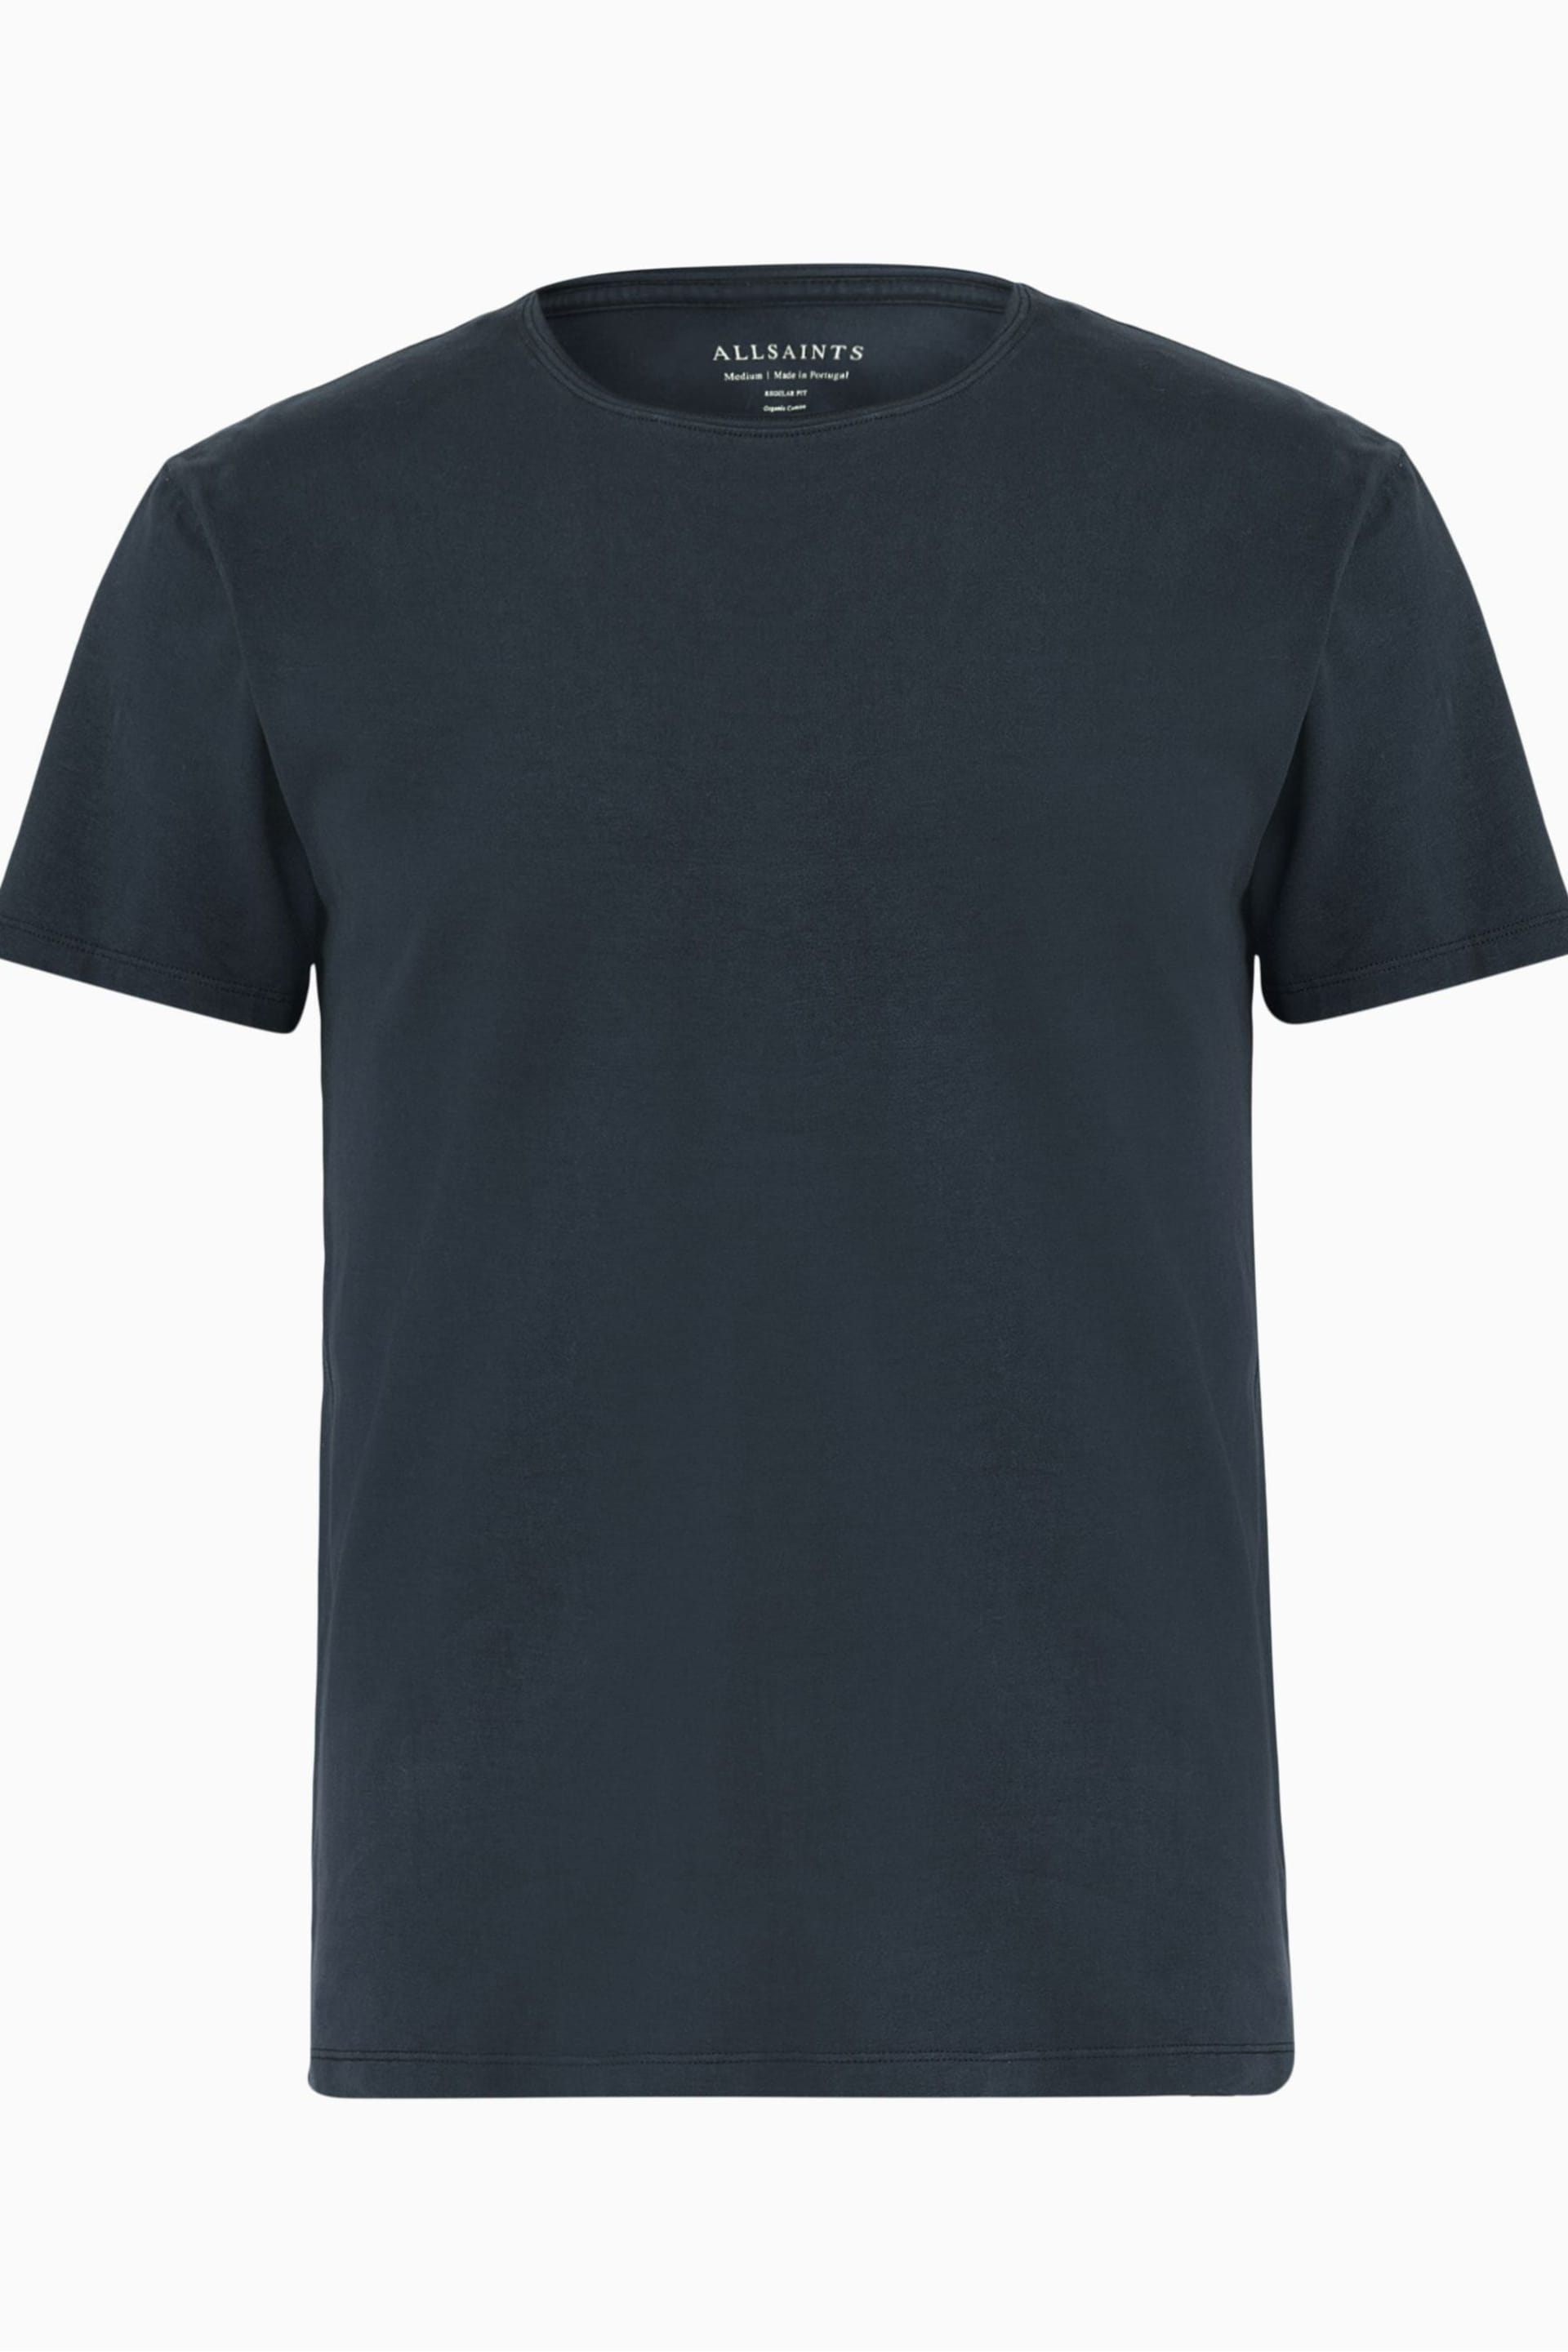 AllSaints Blue Bodega Short Sleeve T-Shirt - Image 5 of 5